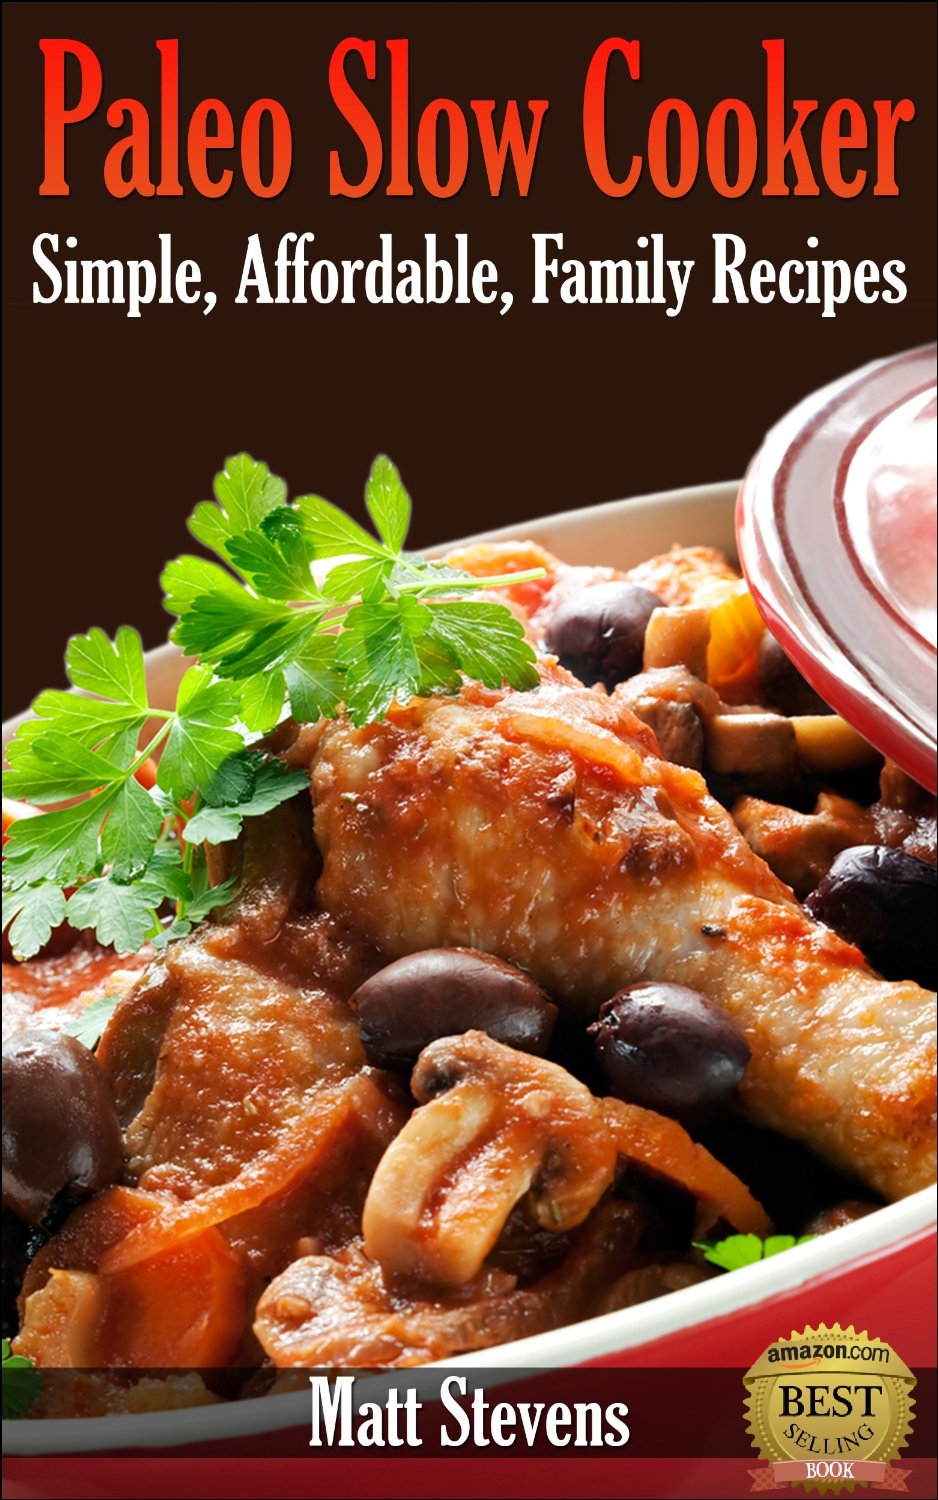 Paleo Slow Cooker: Simple, Affordable, Family Recipes by Matt Stevens